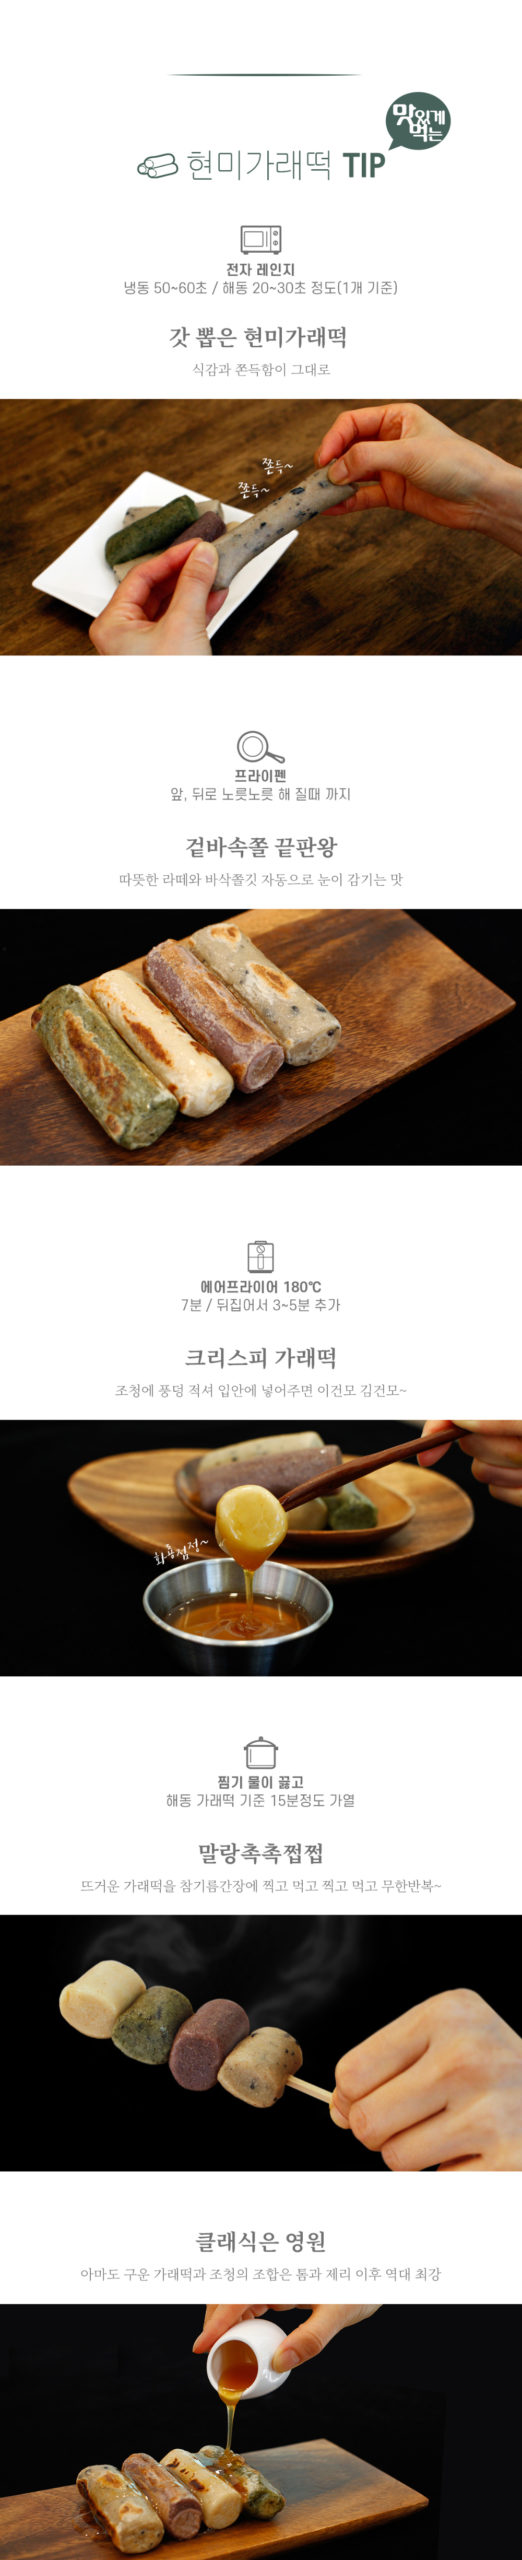 韓國食品-(Expiry Date: 28/6/2024)[Mauminga] Garaetteok[黑豆玄米] 500g